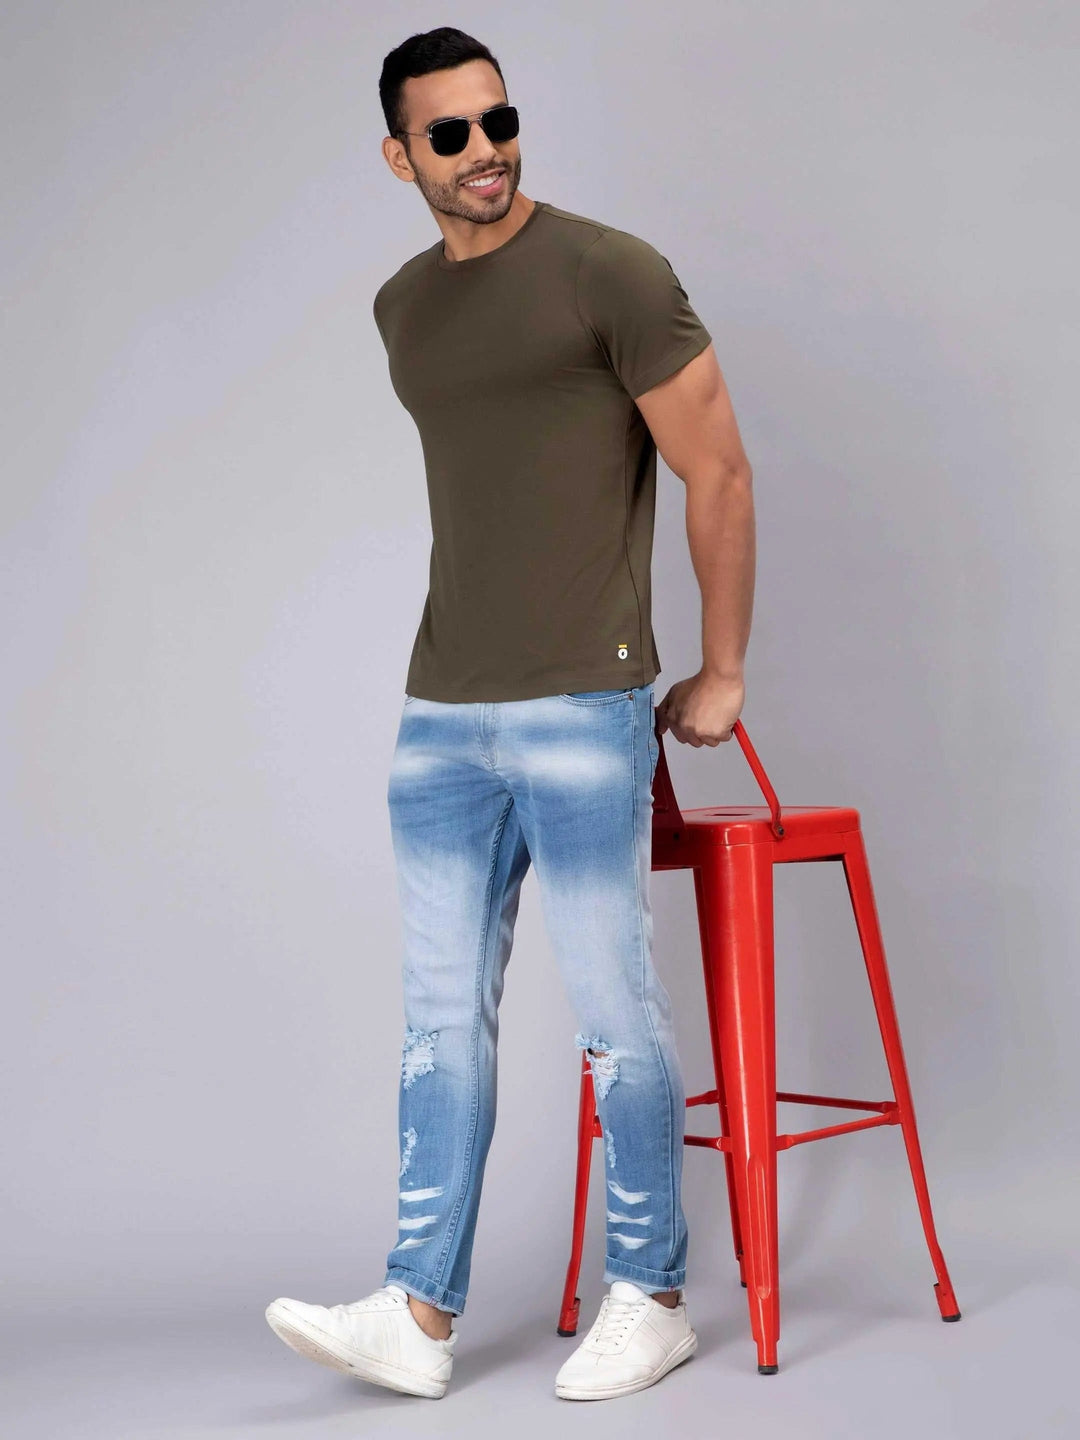 Men's Half-Sleeve Solid Cotton T-shirt